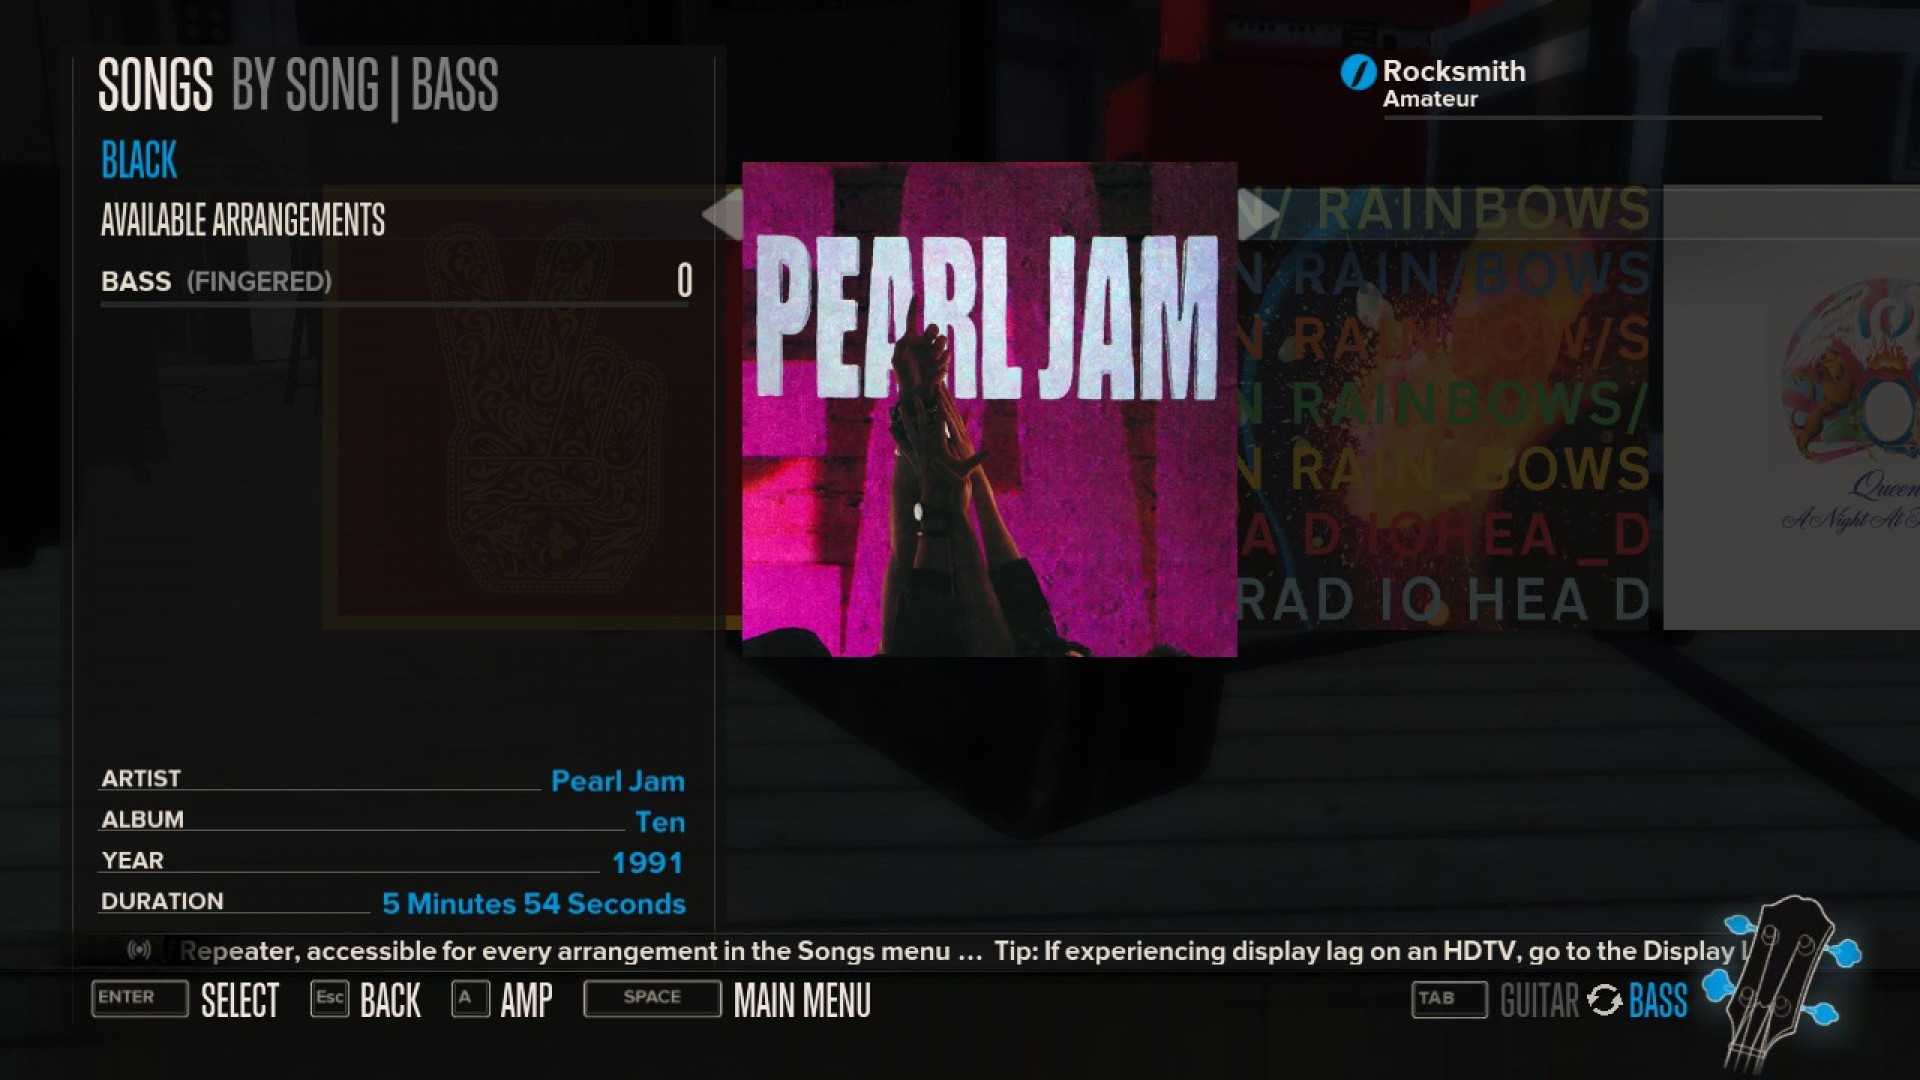 Rocksmith - Pearl Jam - Black screenshot